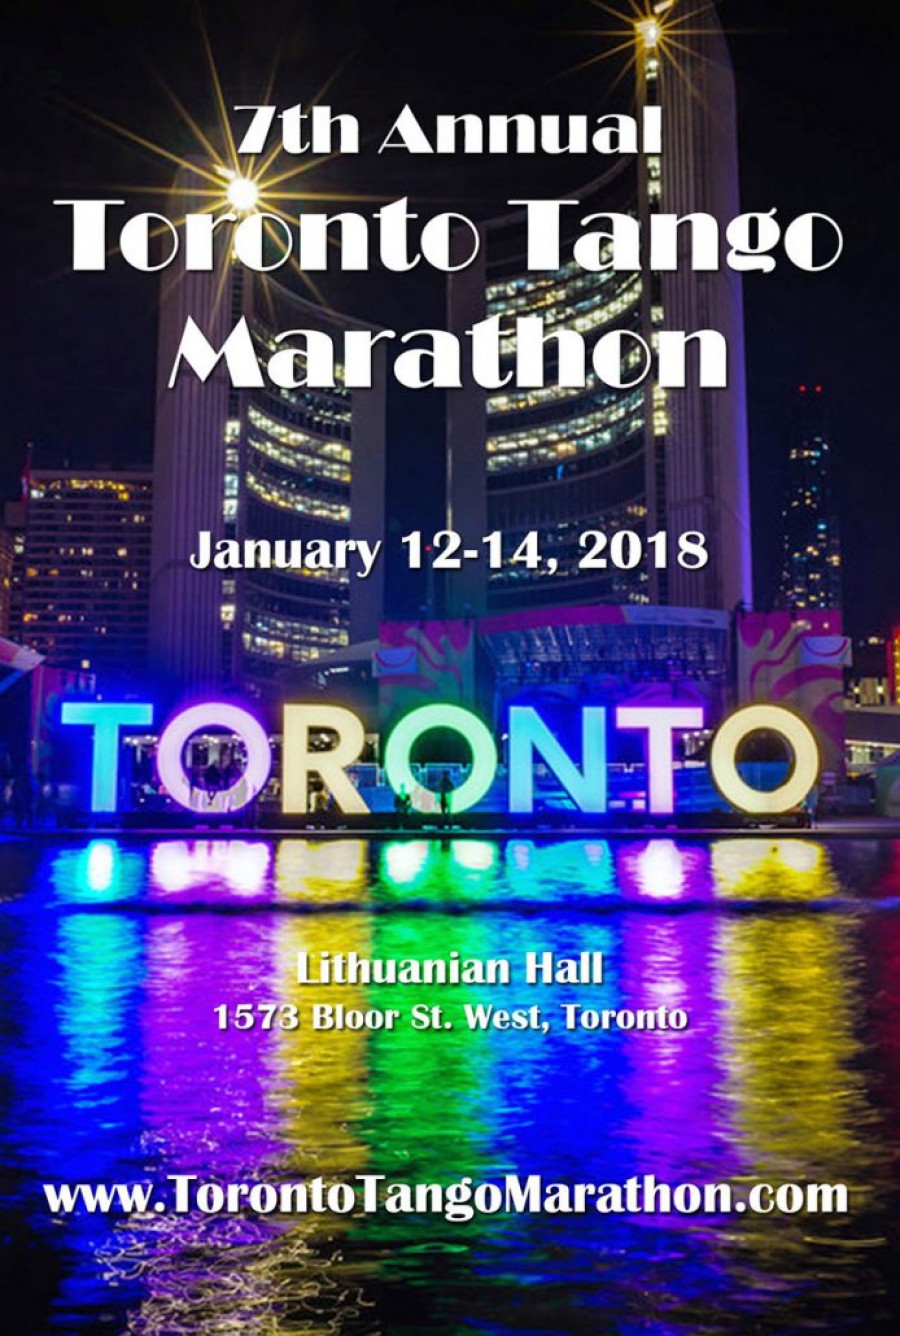 7th Annual Toronto Tango Marathon 2018